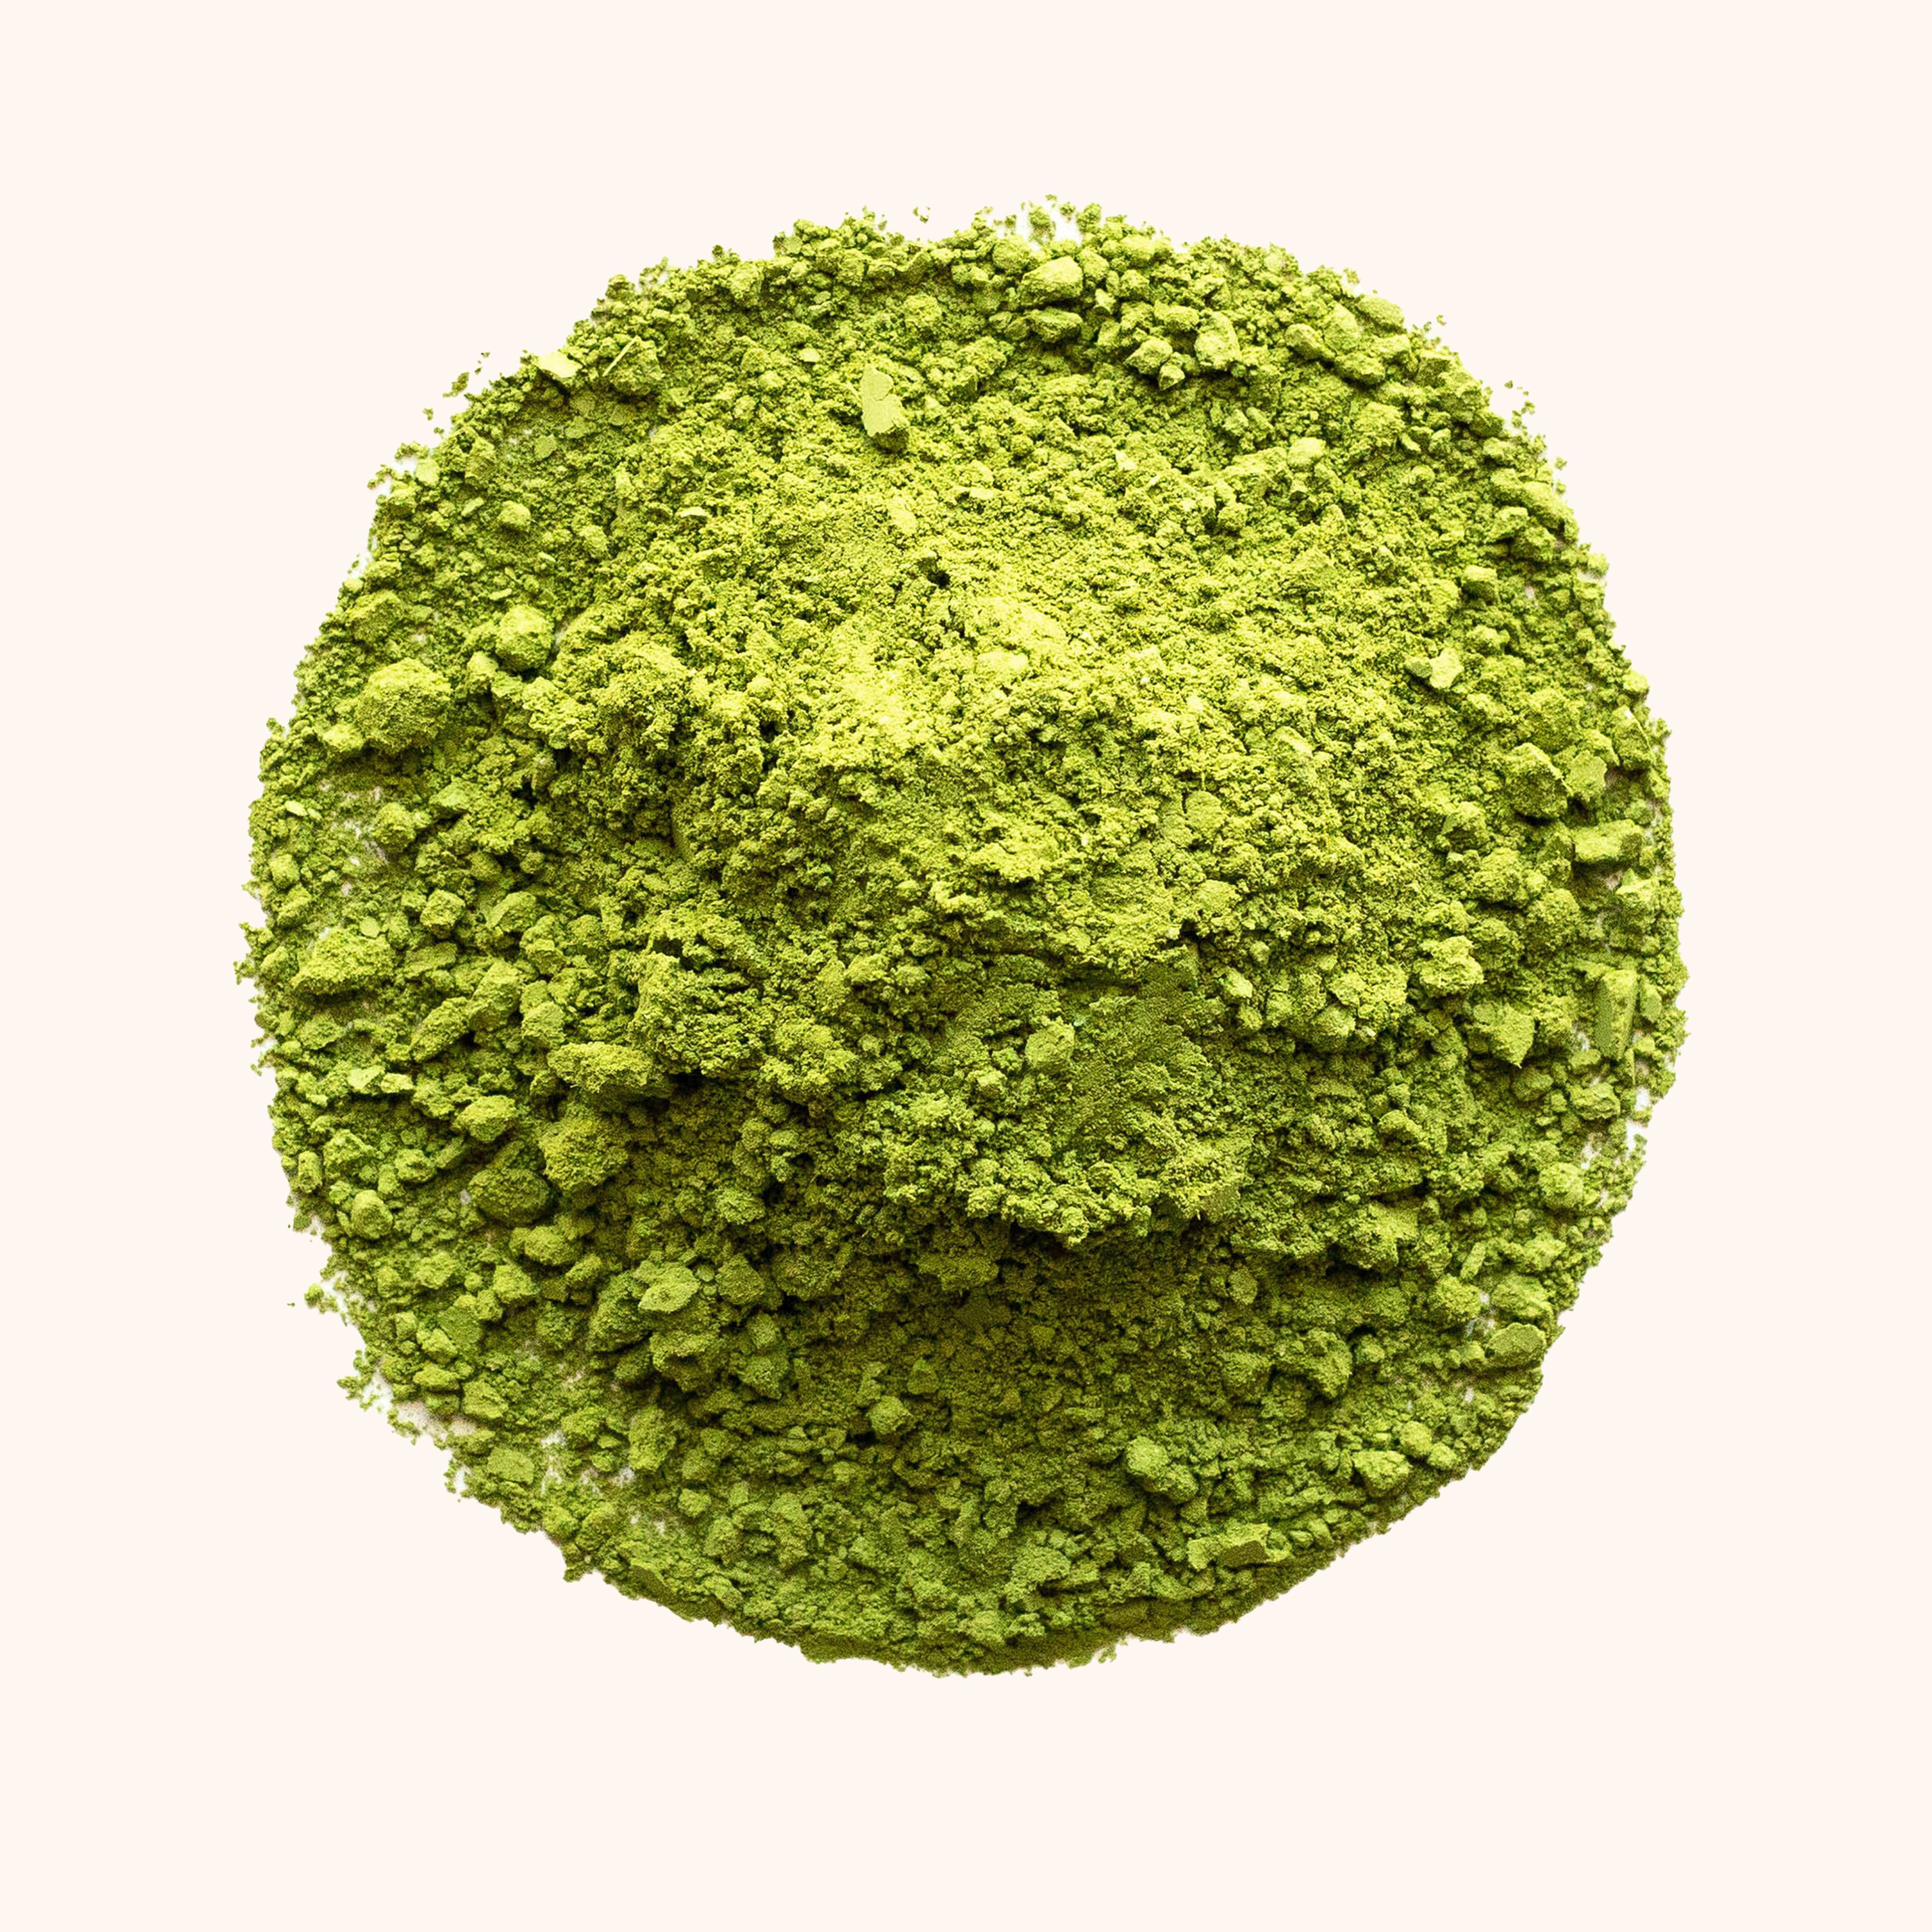 20+ Matcha Green Tea Latte On Wooden Background Stock Illustrations,  Royalty-Free Vector Graphics & Clip Art - iStock